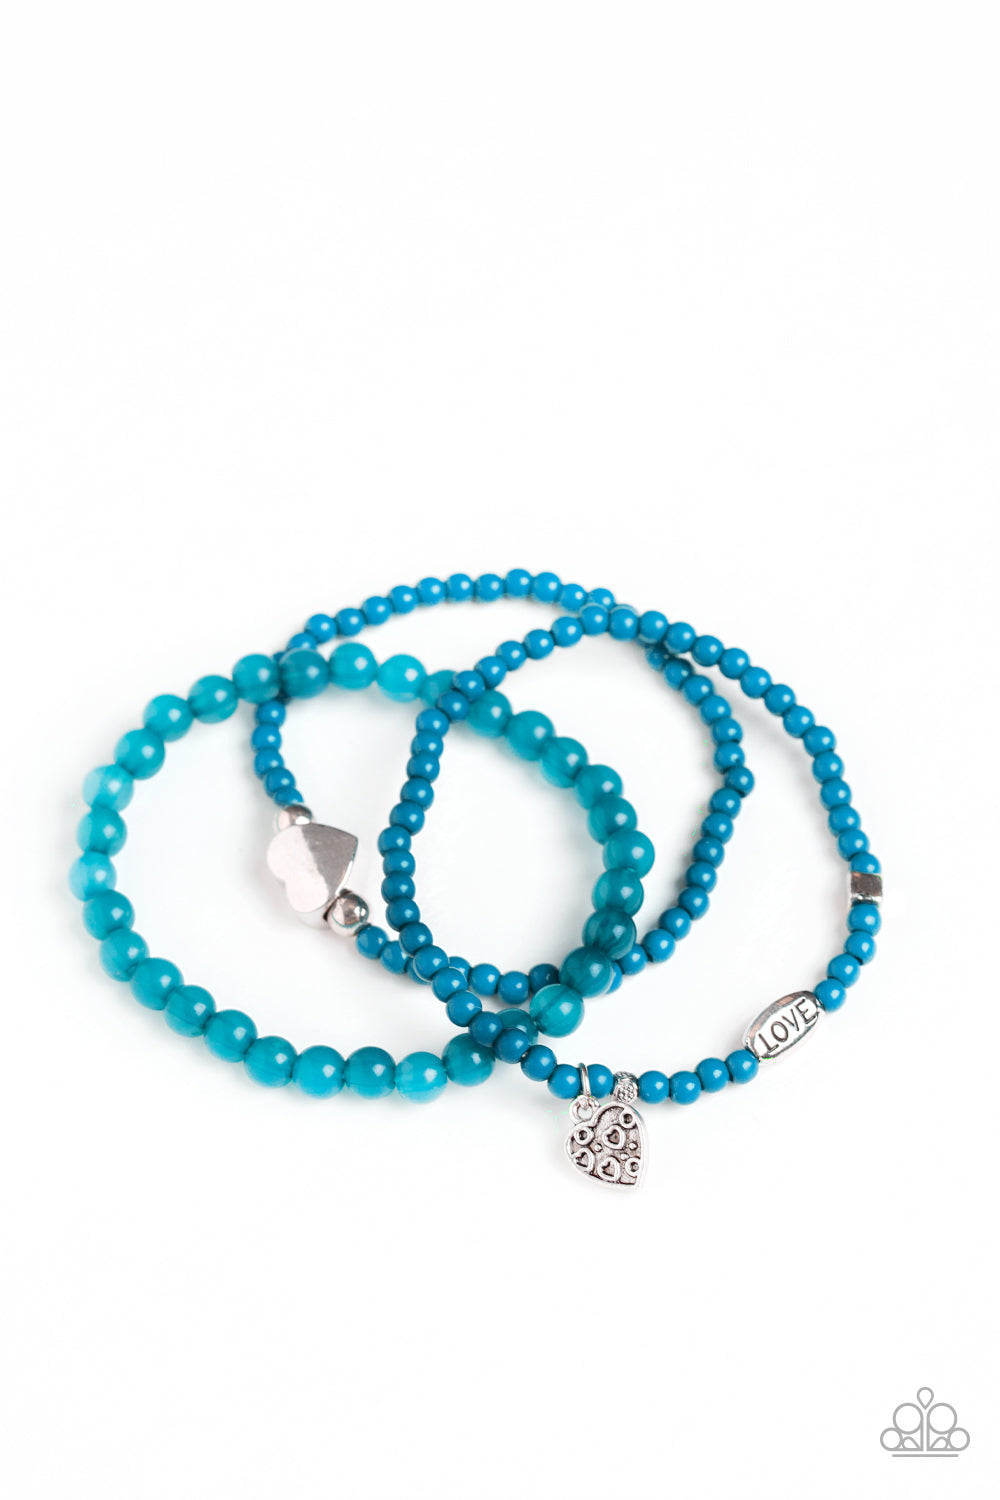 Really Romantic Blue Bracelet Paparazzi Accessories. Charms bracelet. Valentine jewelry. Ships Free